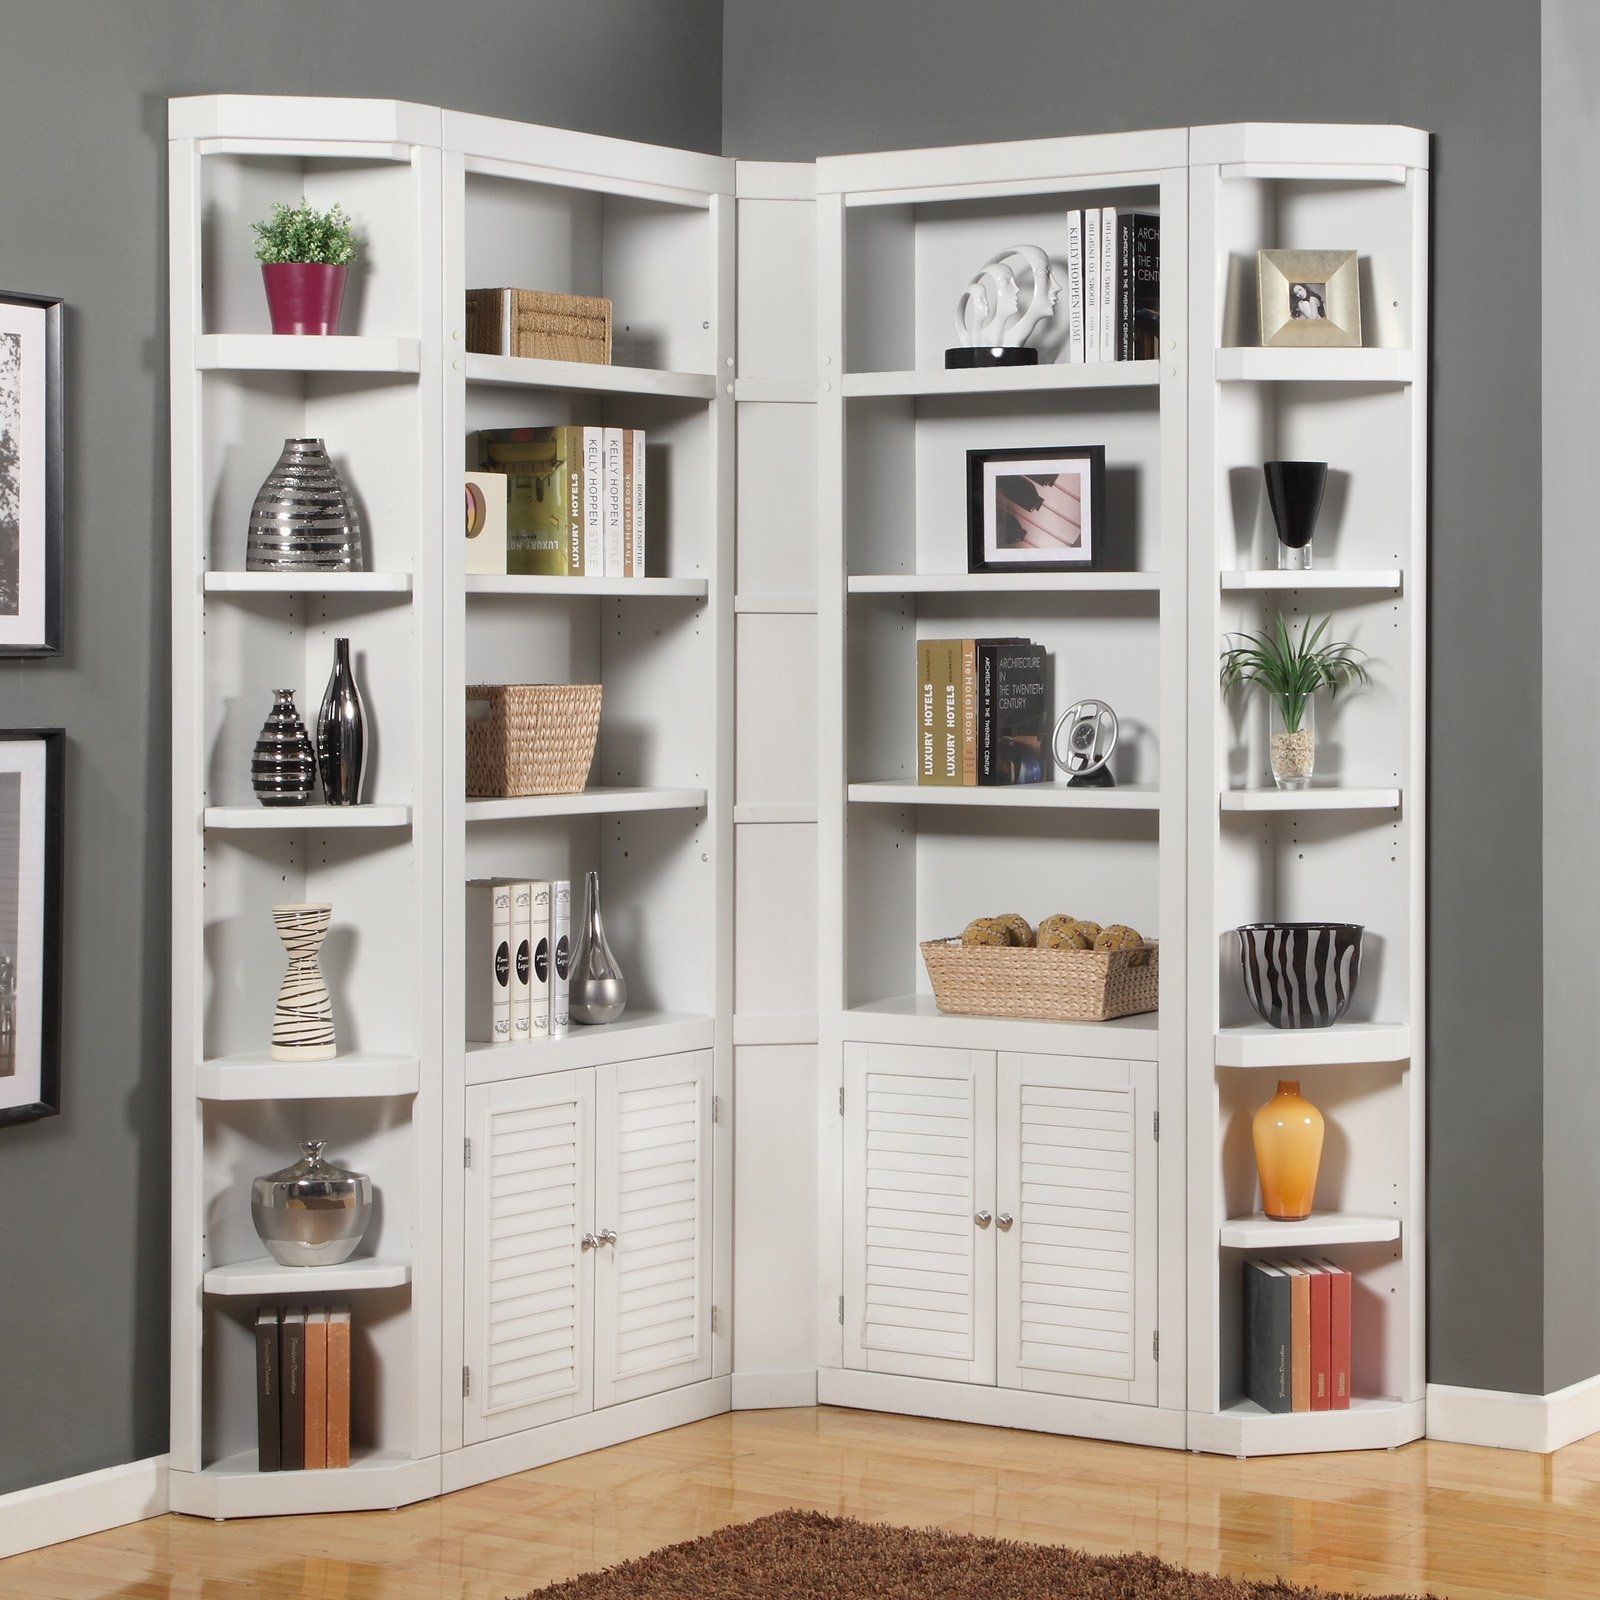 Fresh Elegant Traditional Bookshelf Decorating Ideas 23585 With Traditional Bookshelf Designs (Photo 12 of 15)